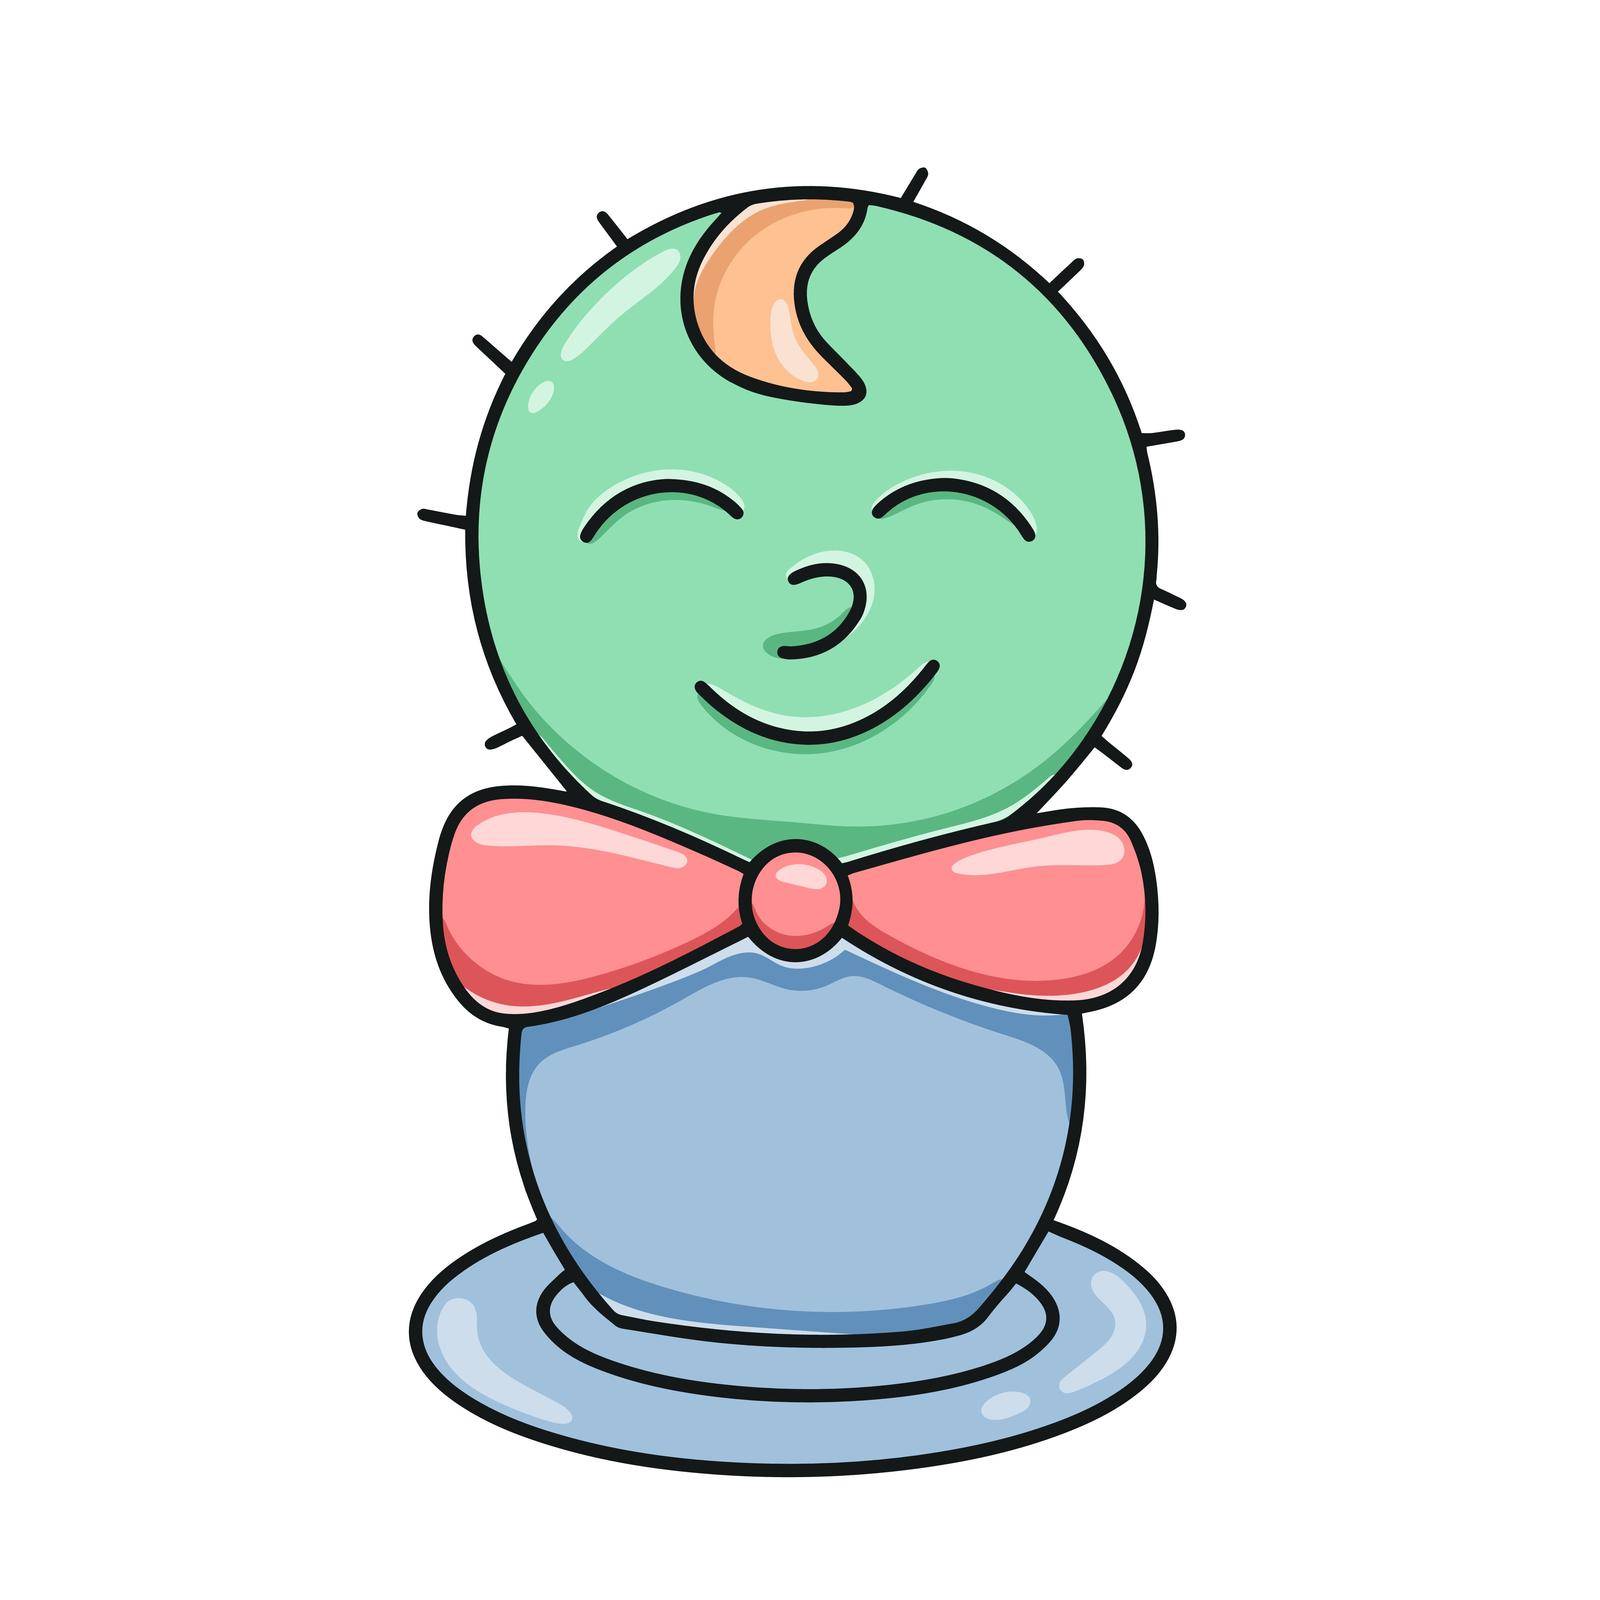 Cactus in pot baby character cartoon by TassiaK